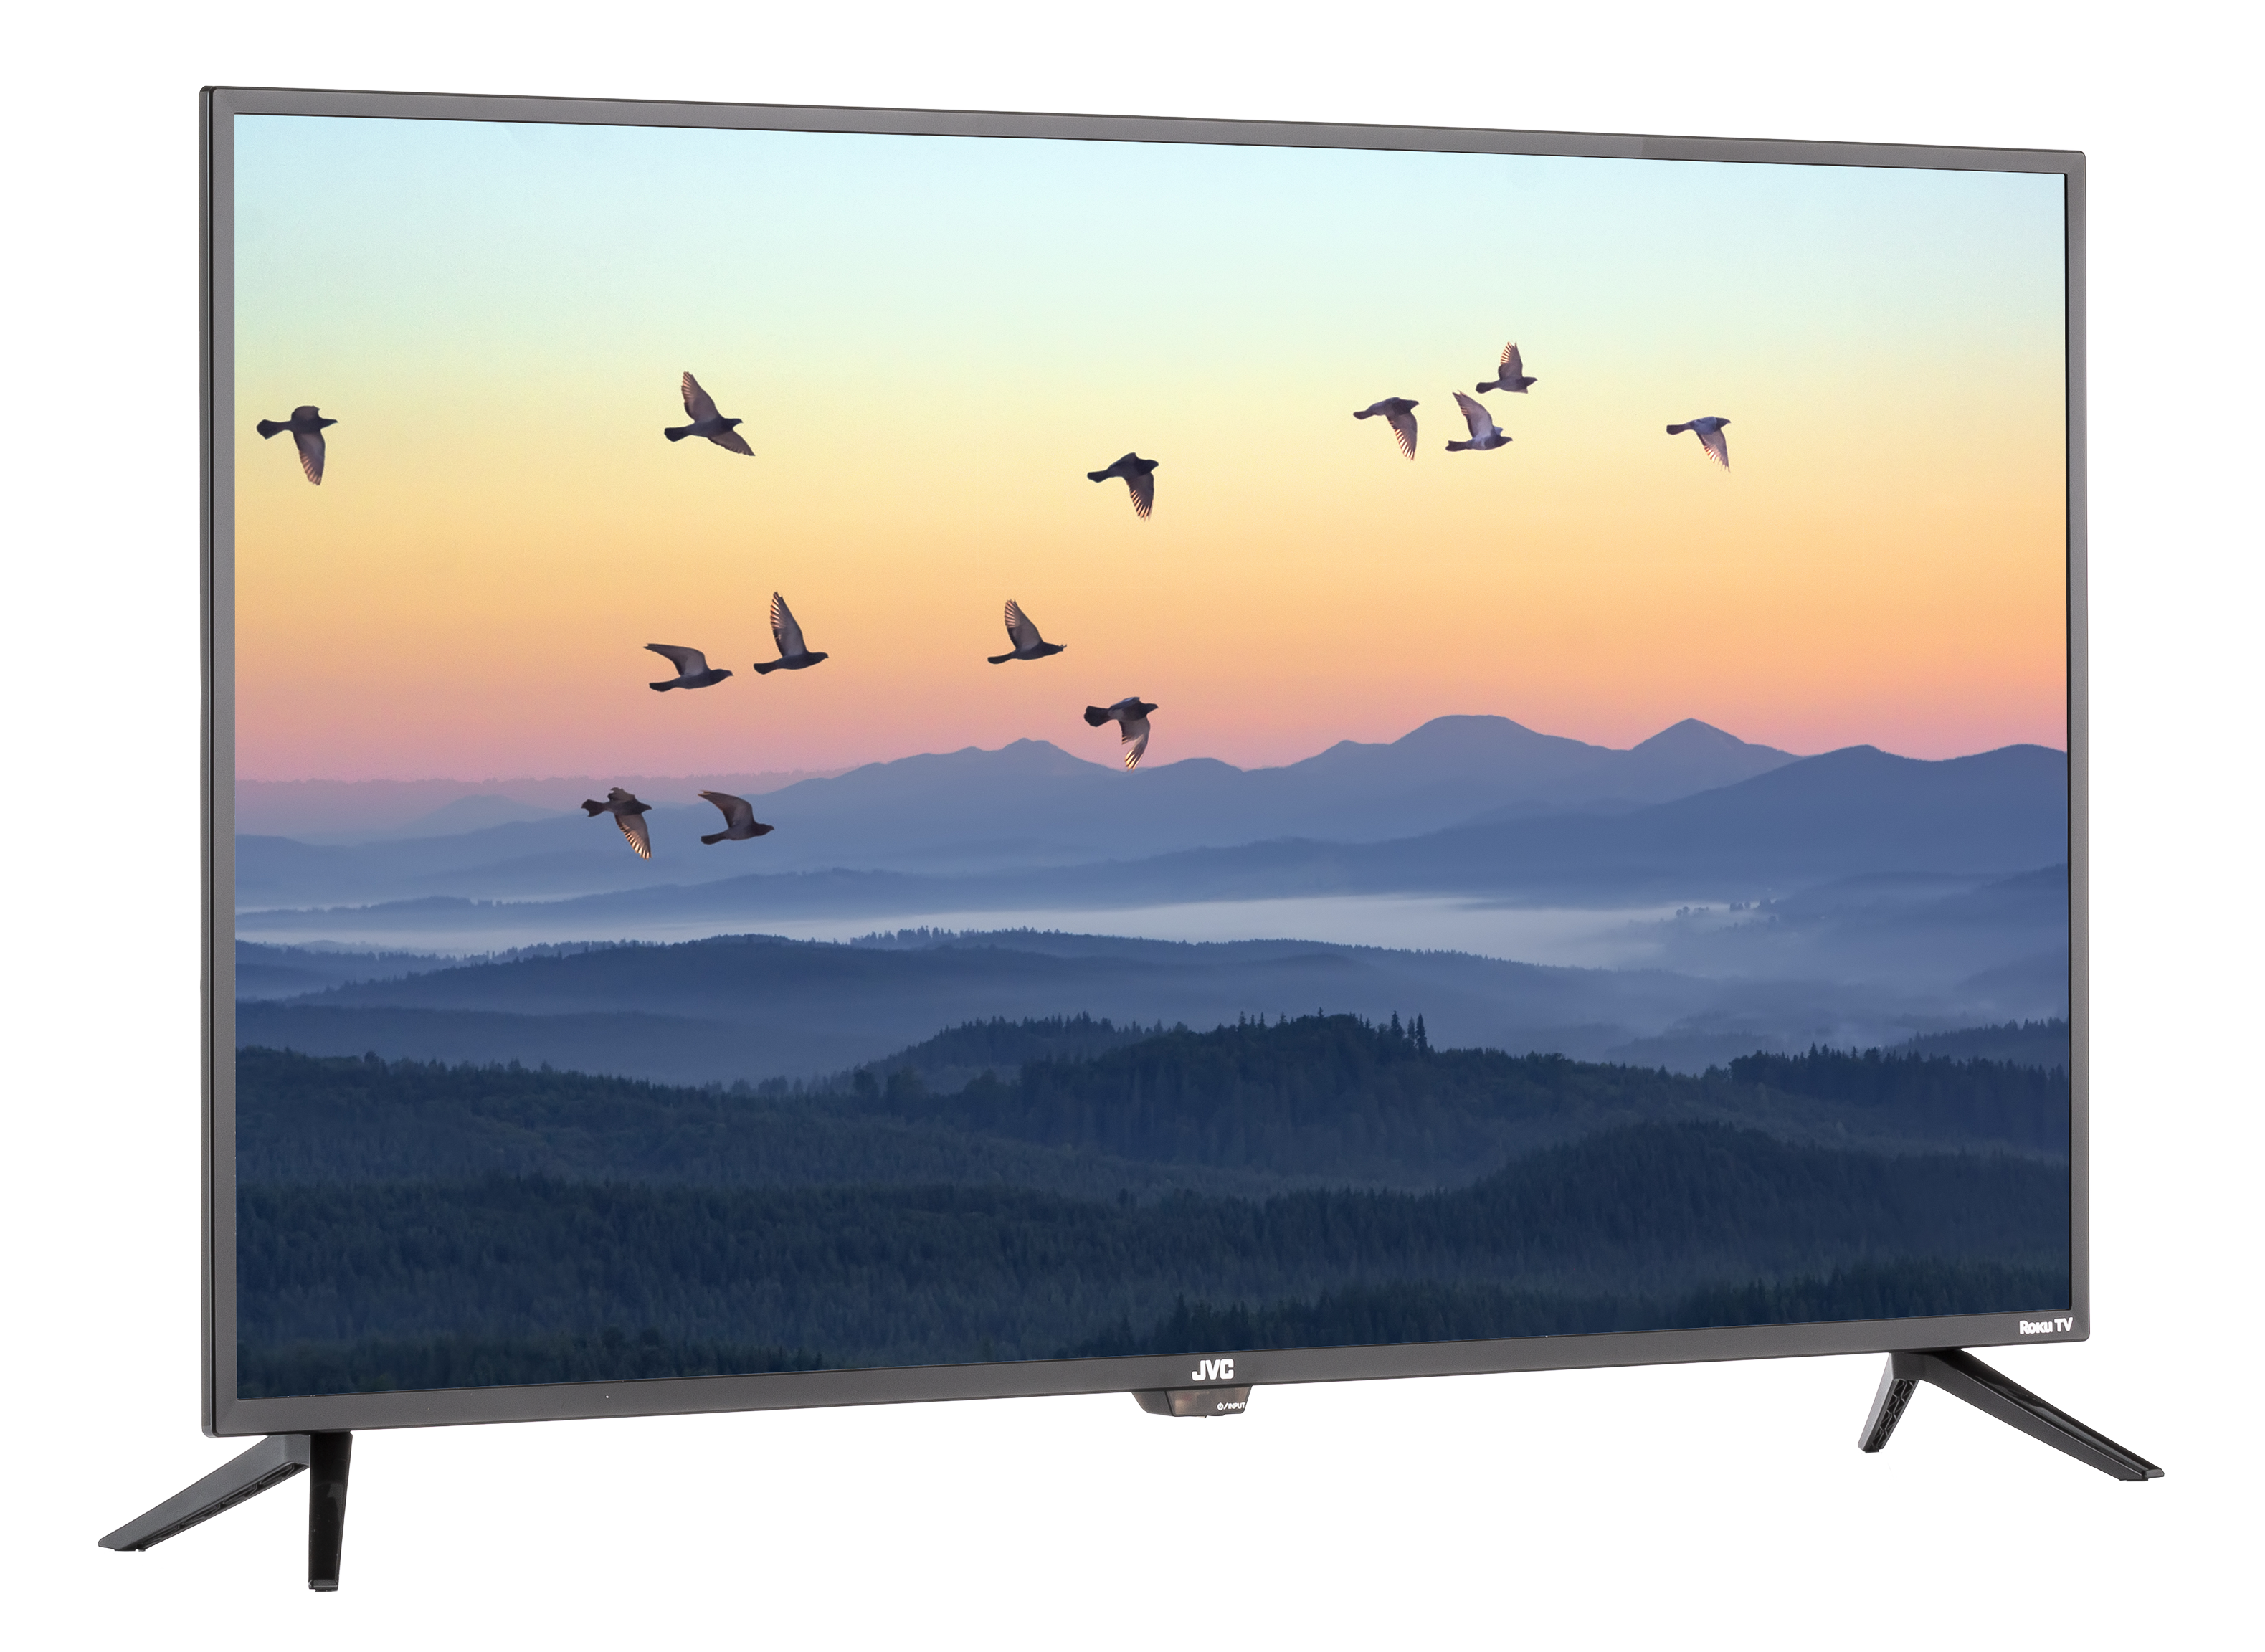 JVC 43 Class Premier Series 4k Ultra HD ROKU Smart TV - LT-43MAW605